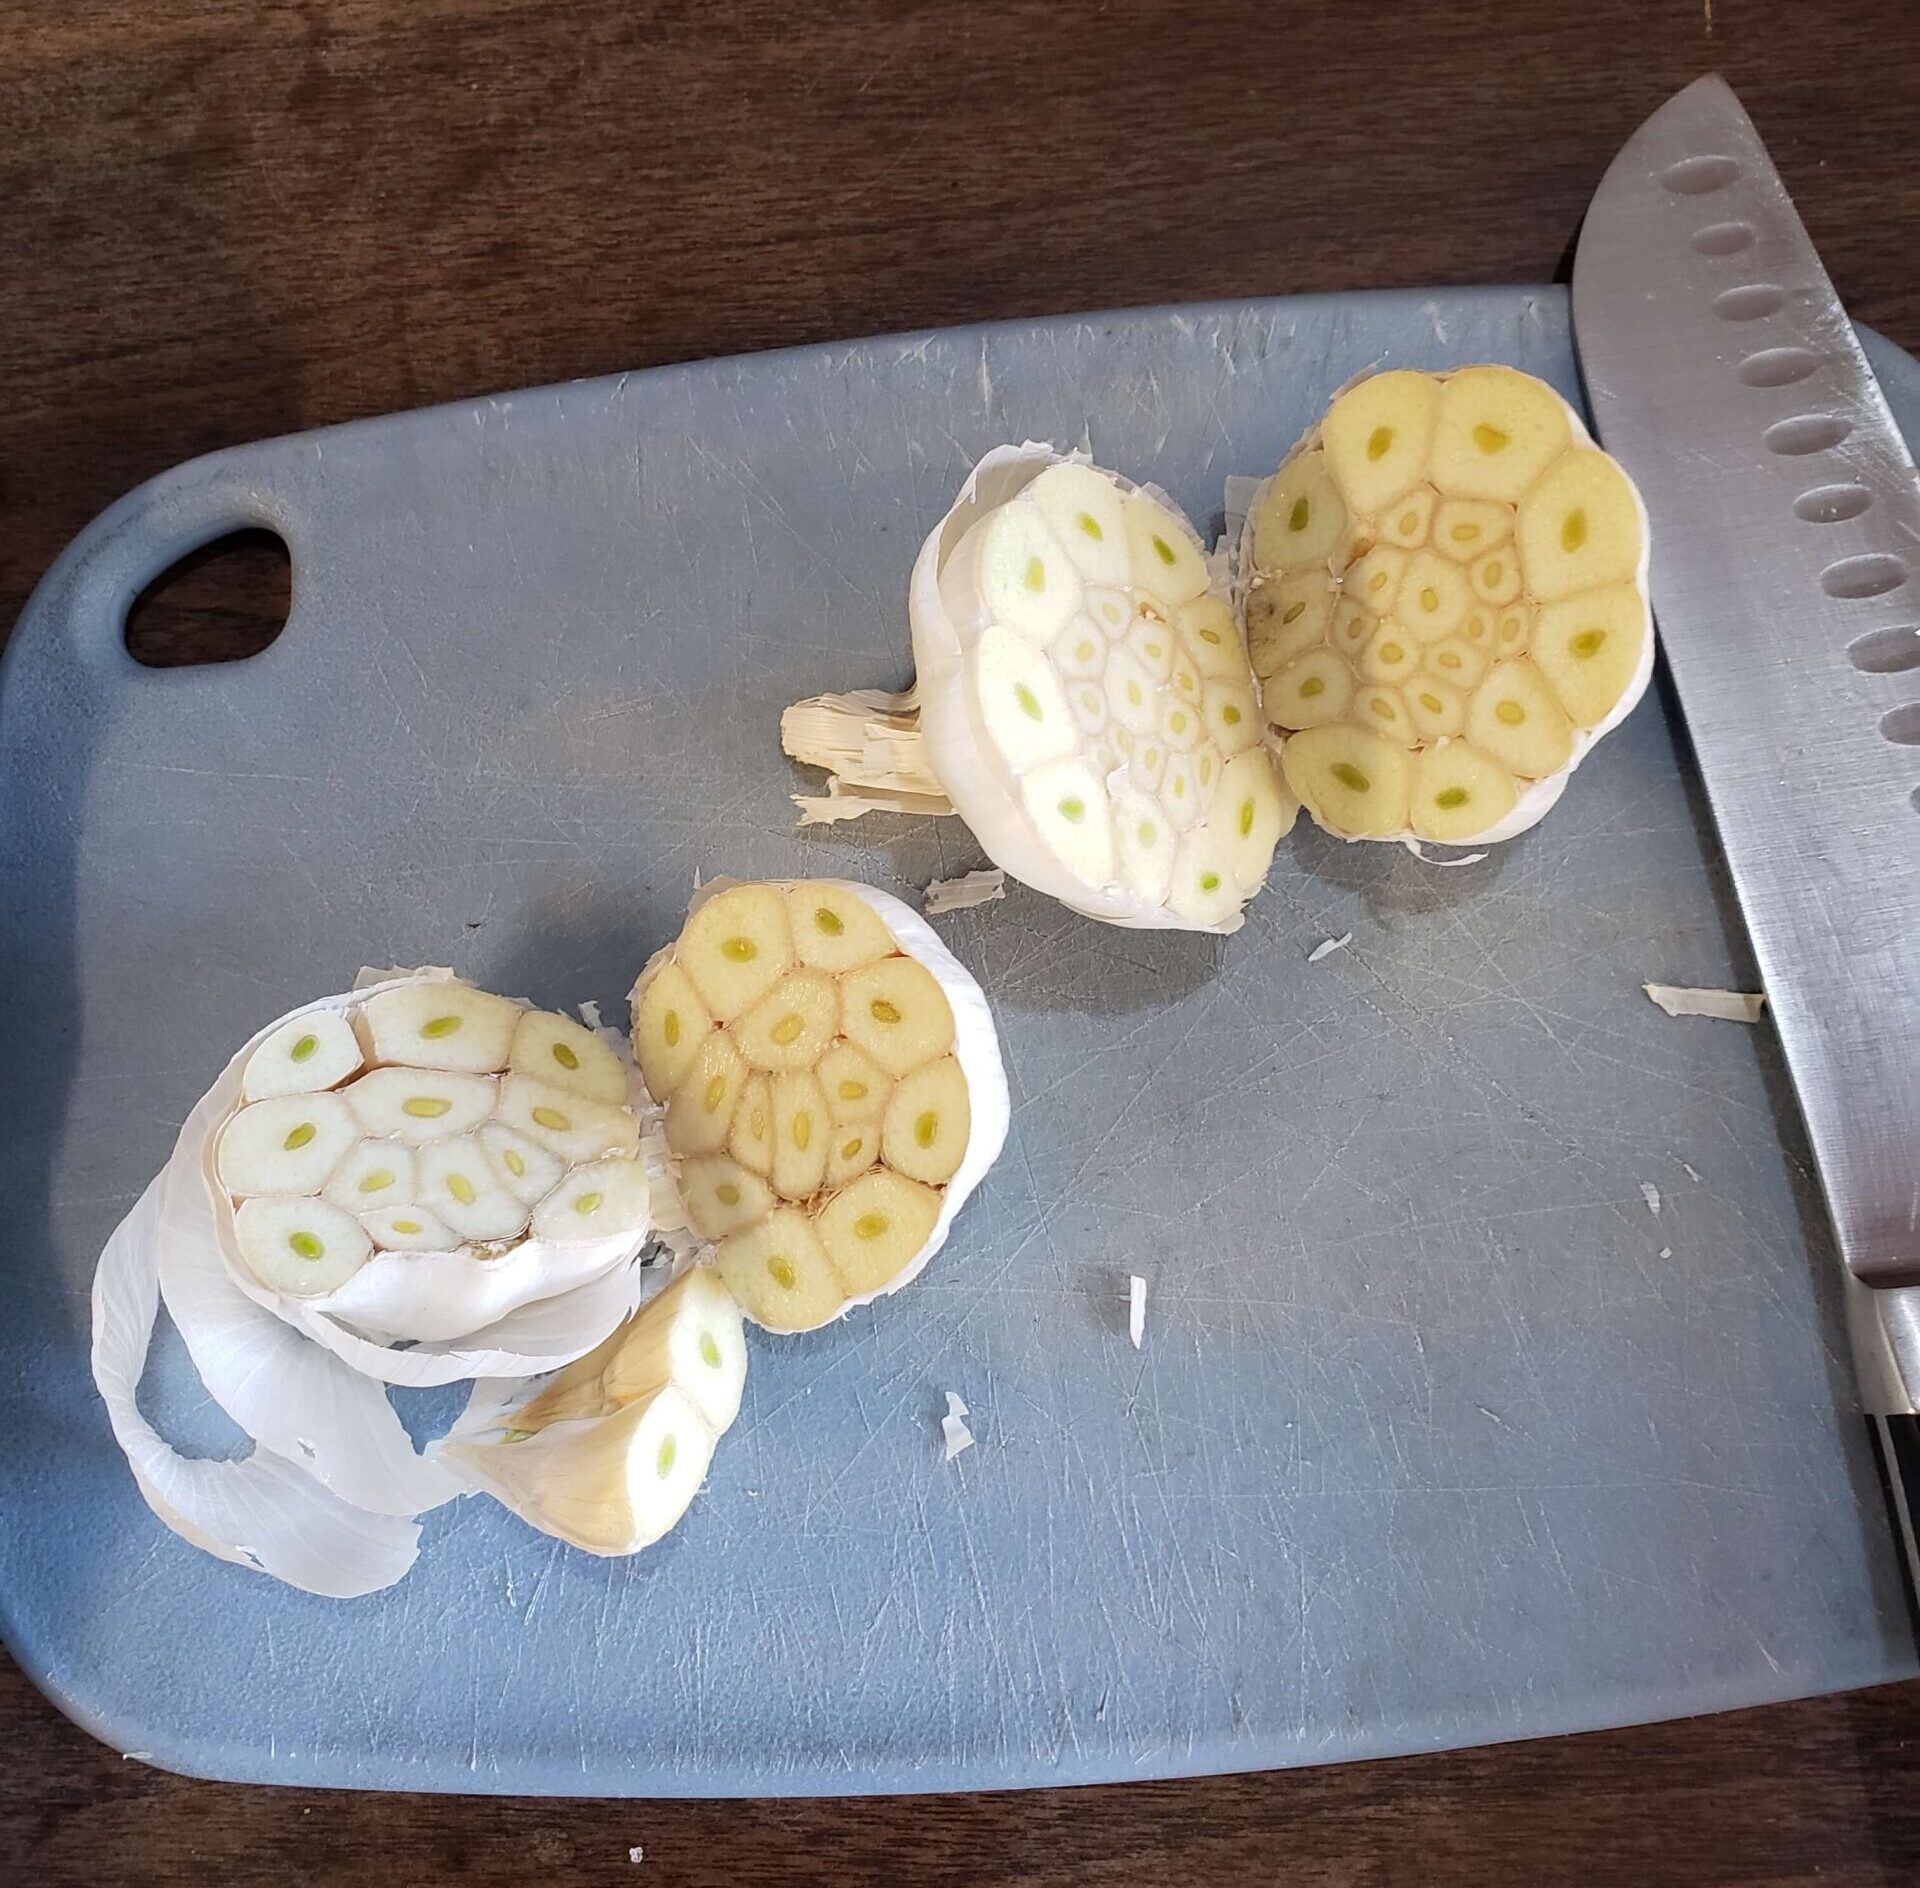 Roasted Garlice Recipe Preparation